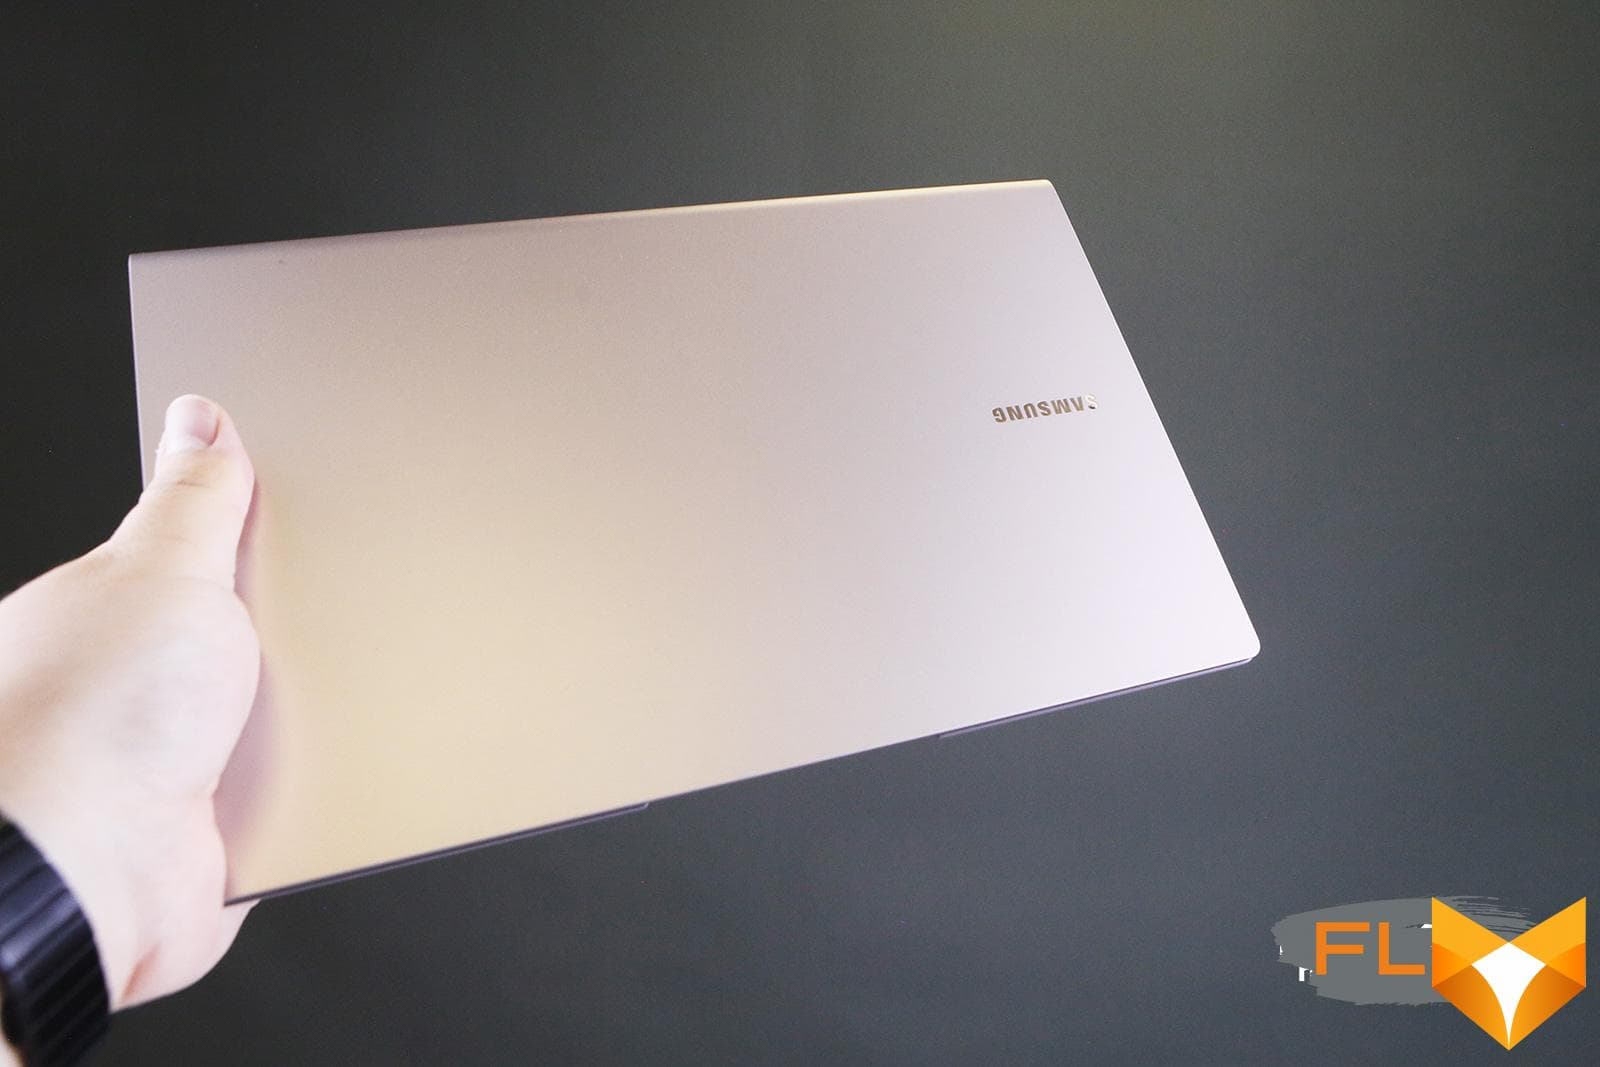 Ultraportable ARM Laptop - Samsung Galaxy Book S